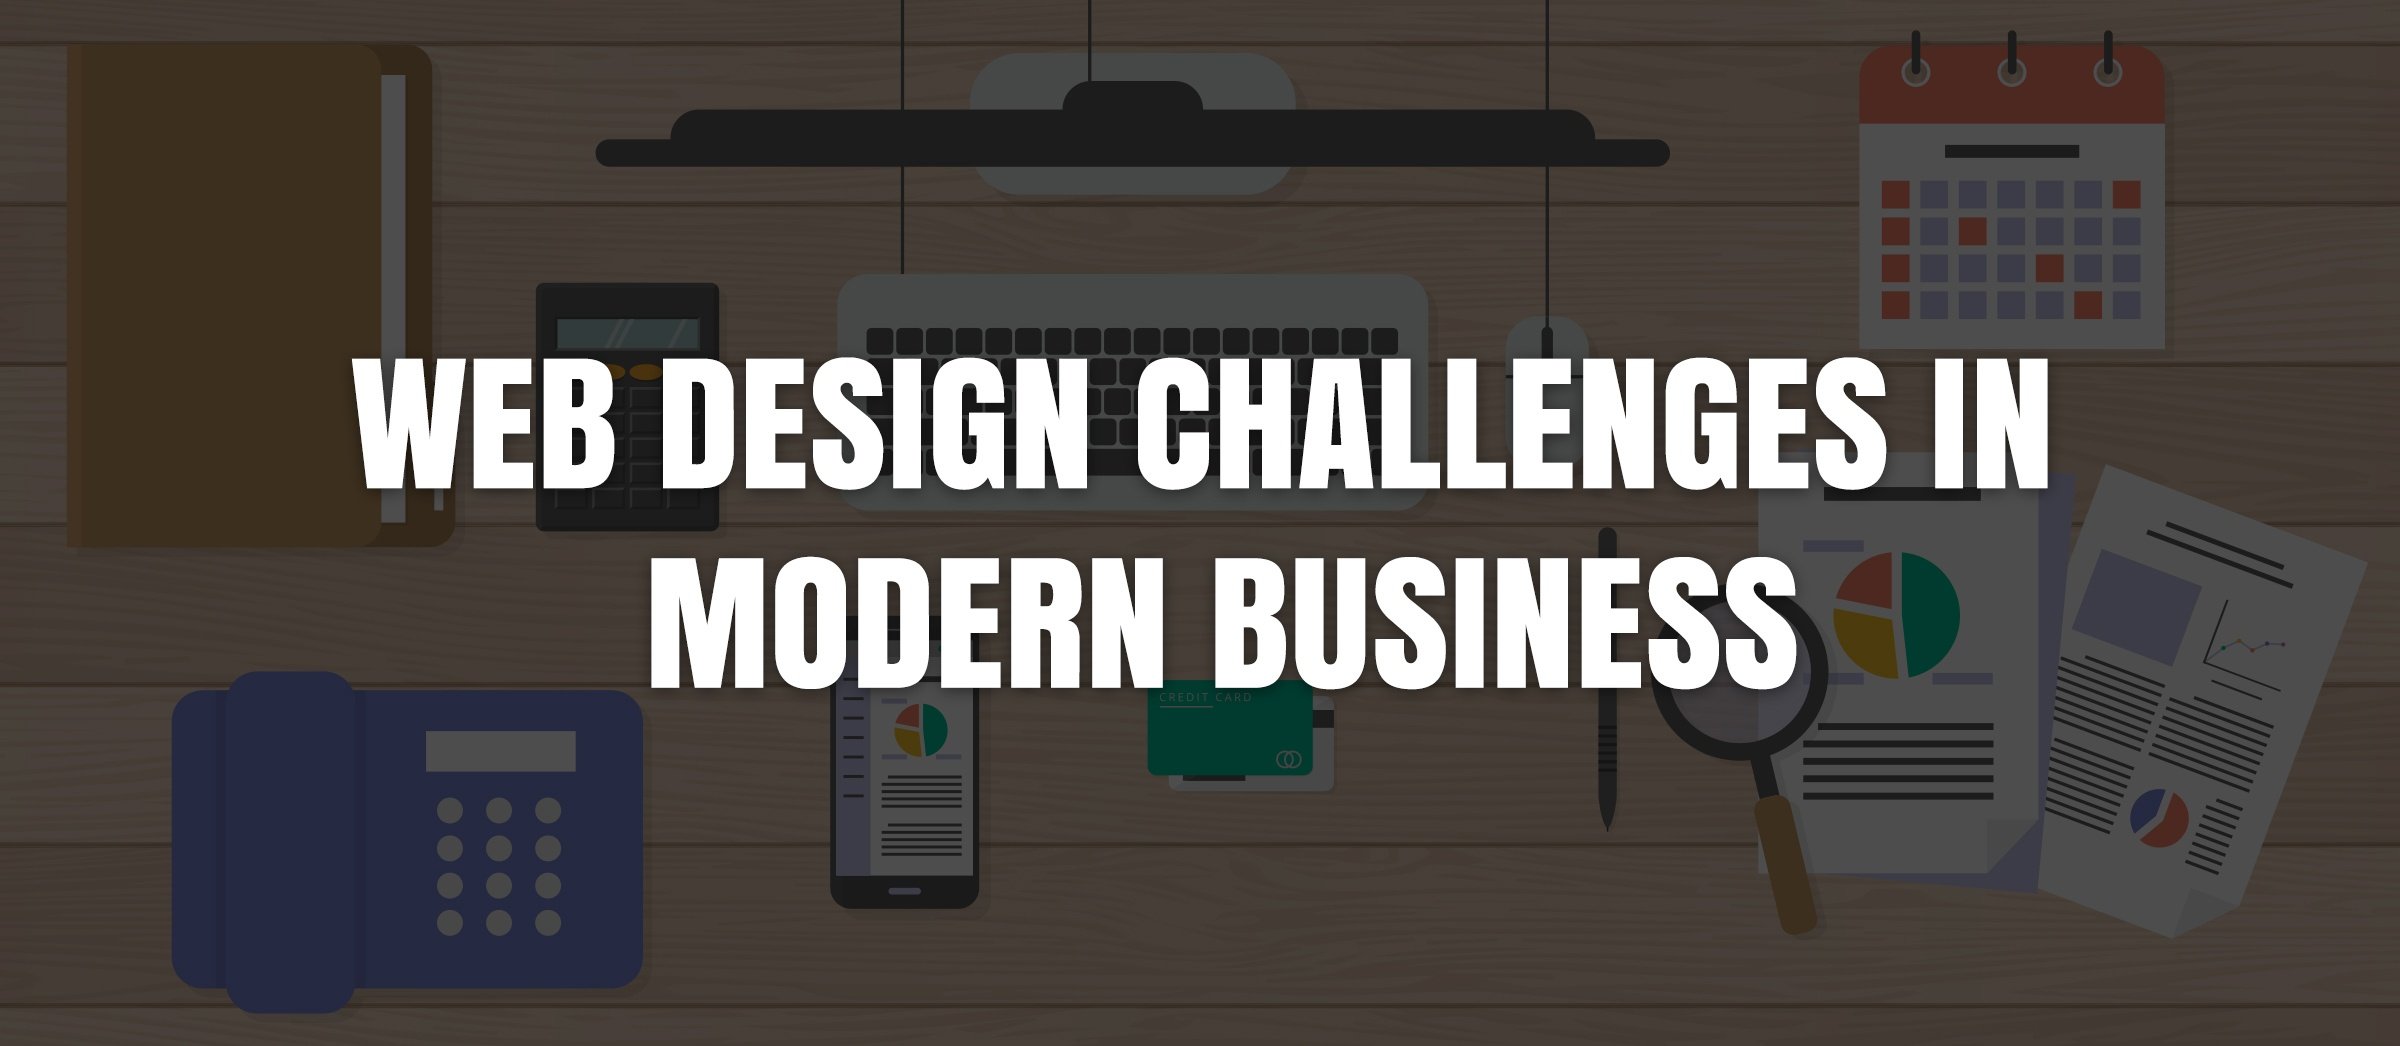 Web design challenges in modern business